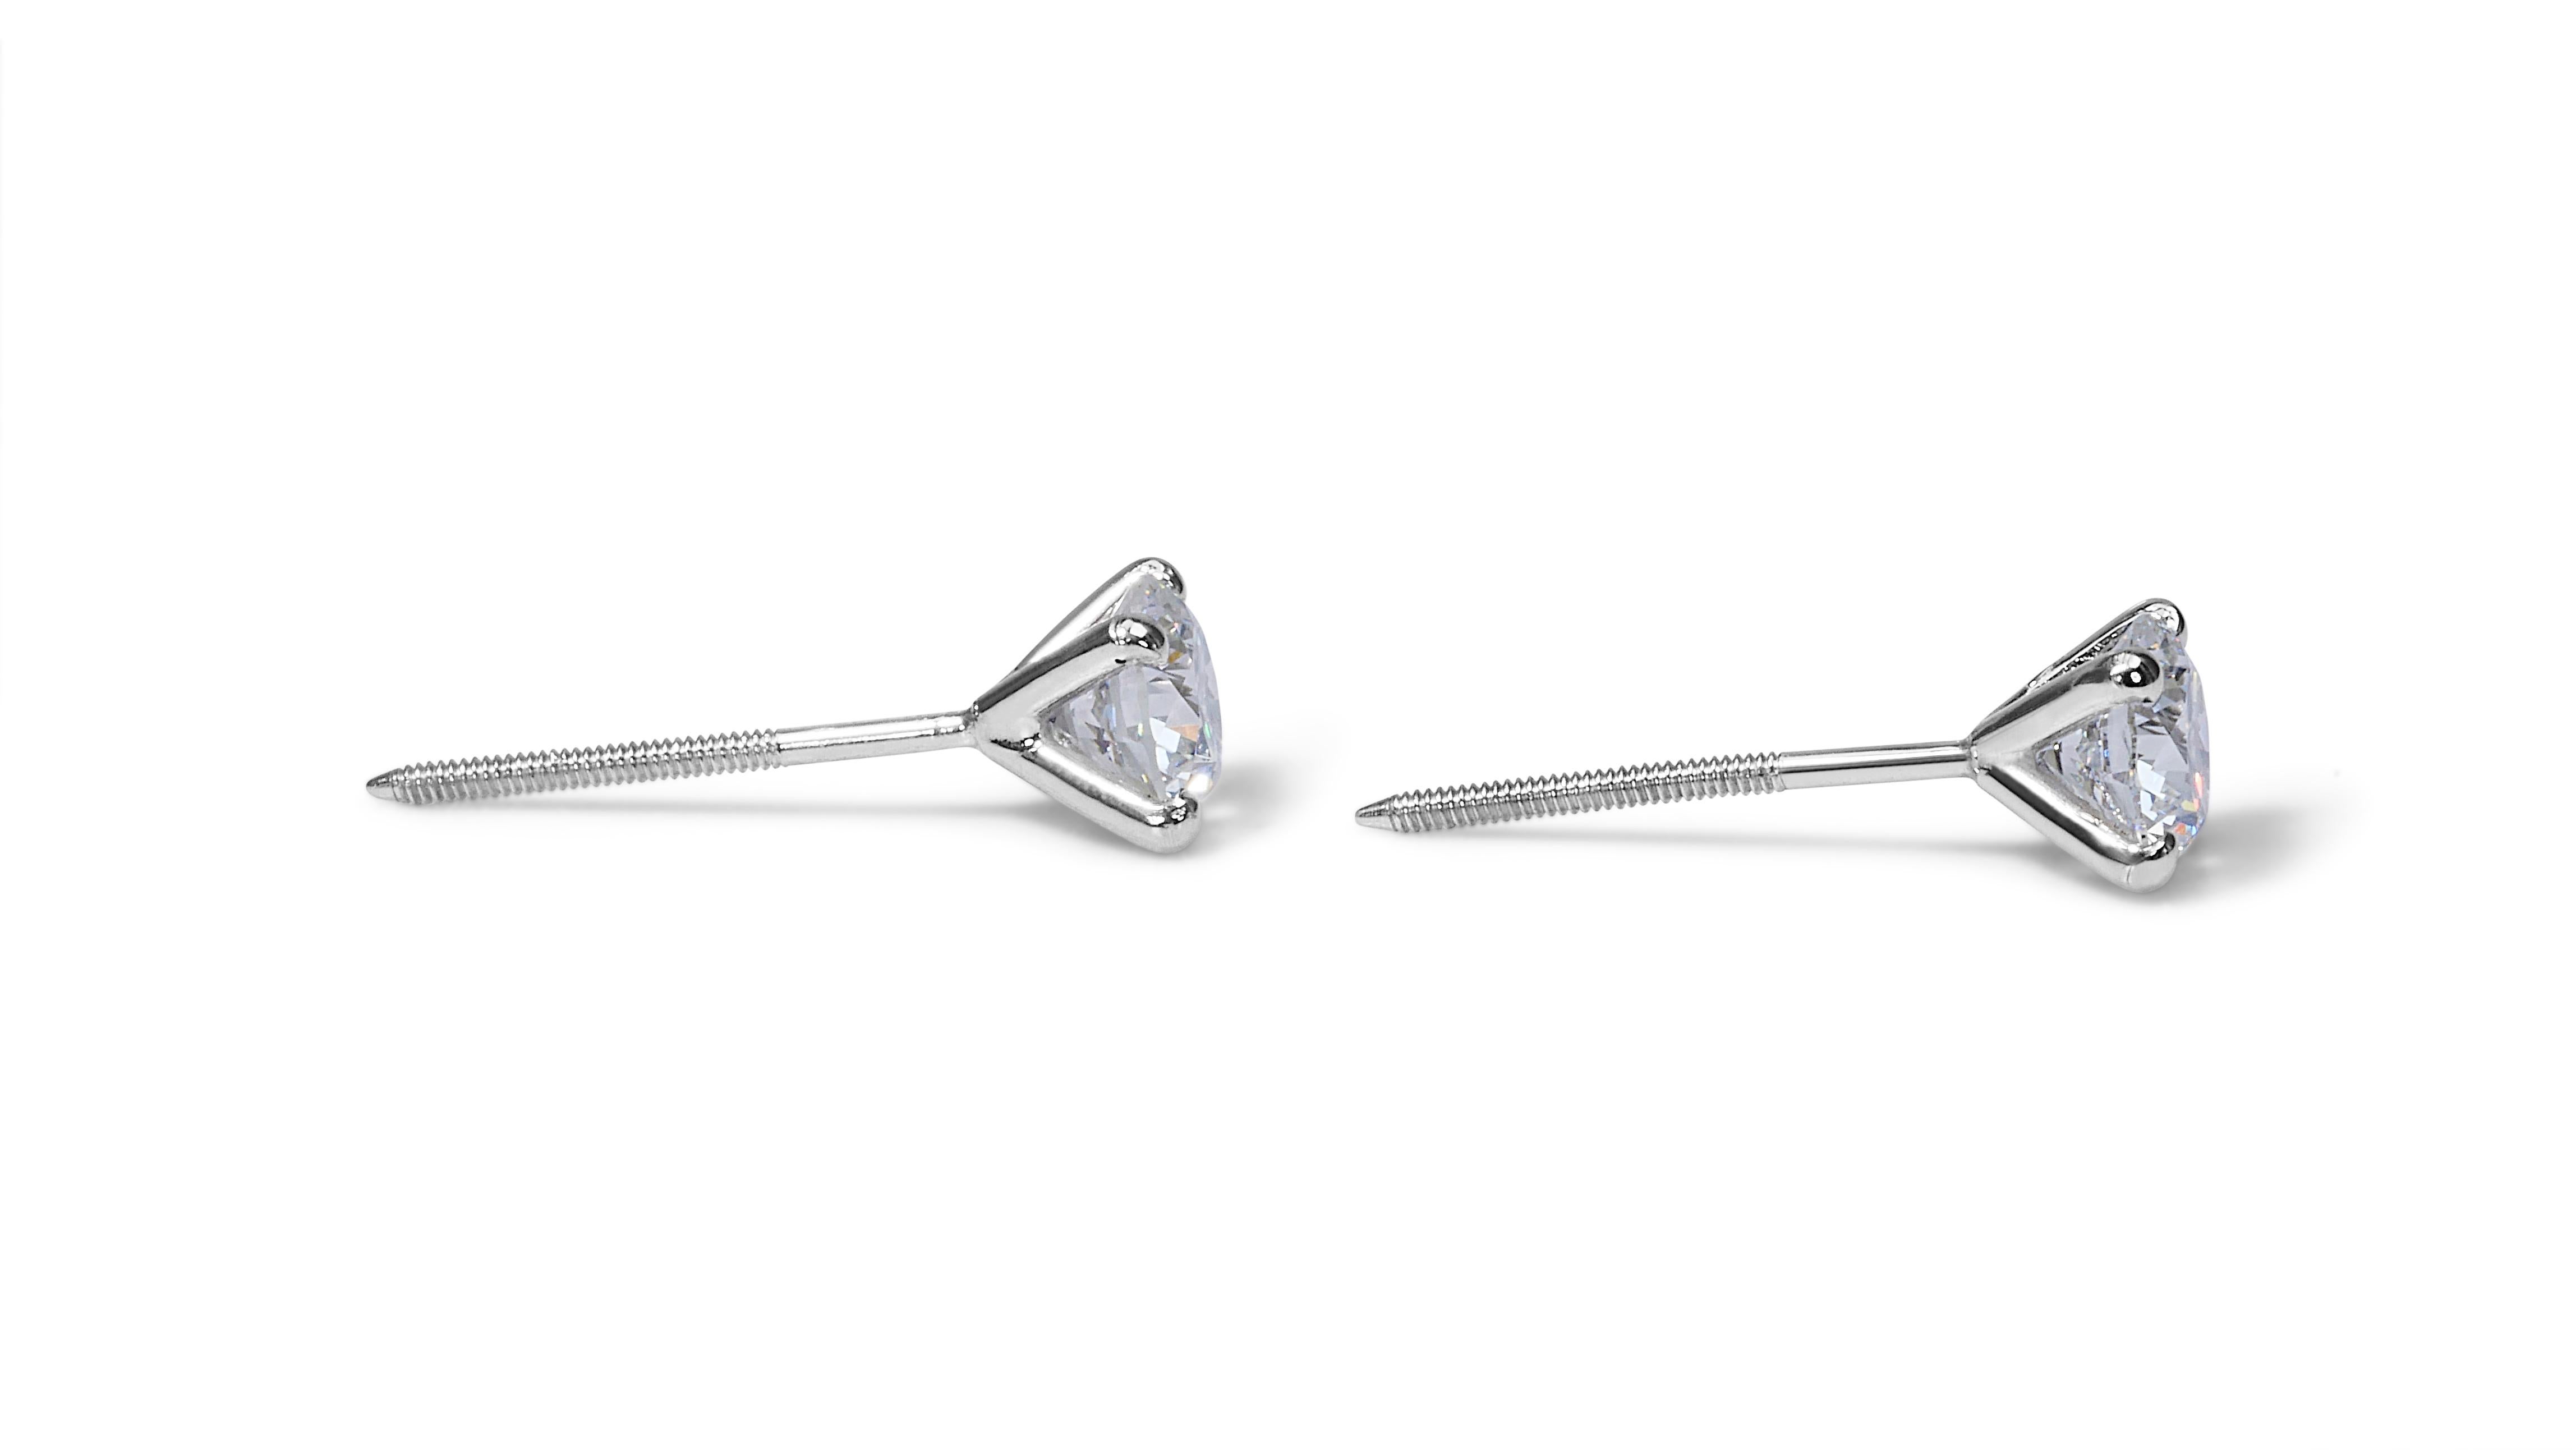 Mesmerizing 2.01ct Diamond Stud Earrings in 18k White Gold - GIA Certified  For Sale 3